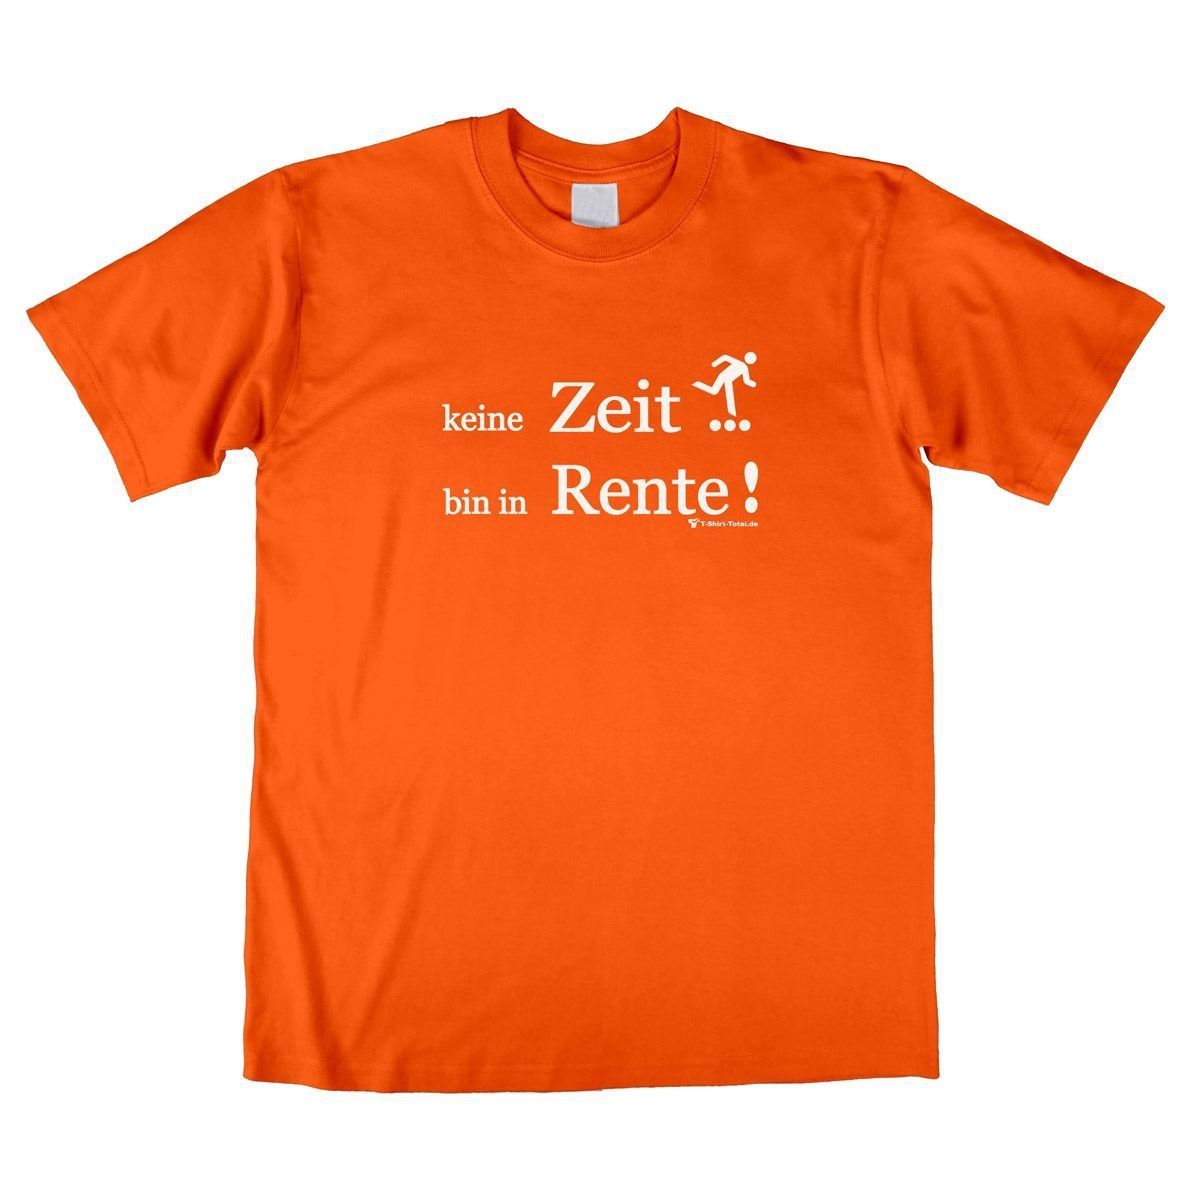 Bin in Rente Unisex T-Shirt orange Extra Large